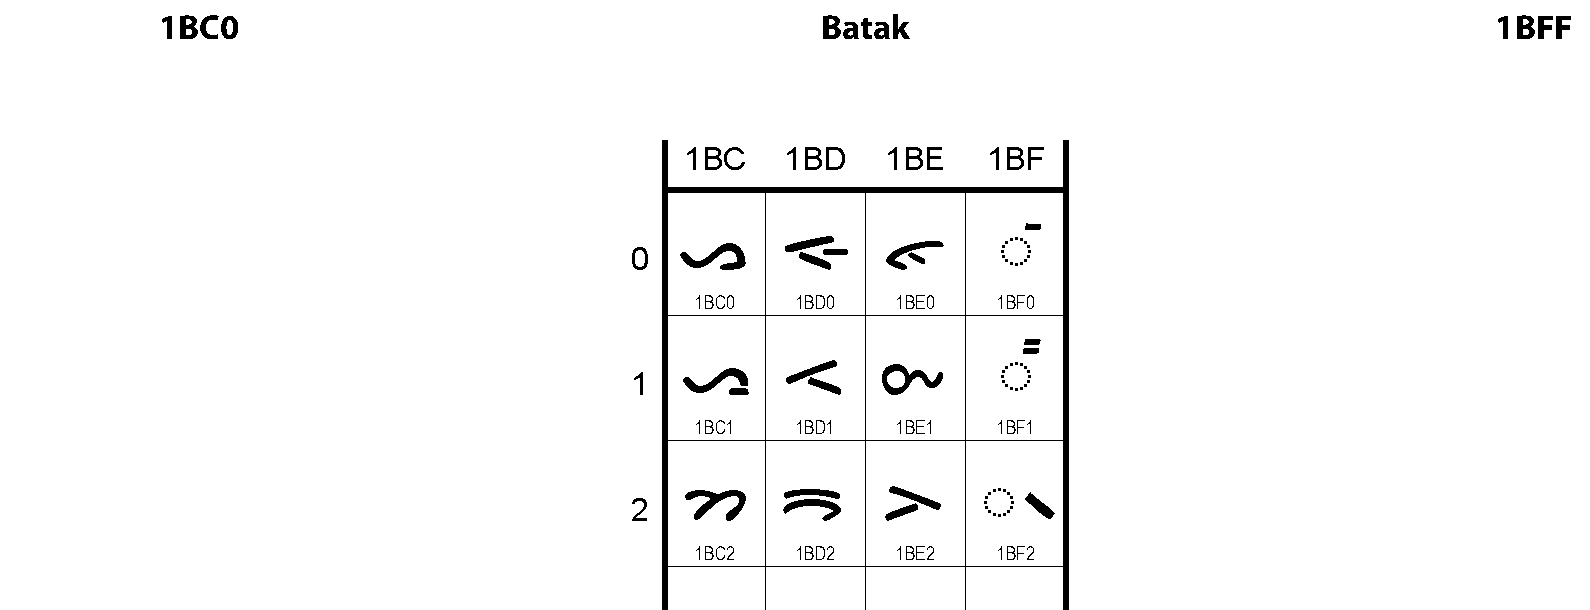 Unicode - Batak